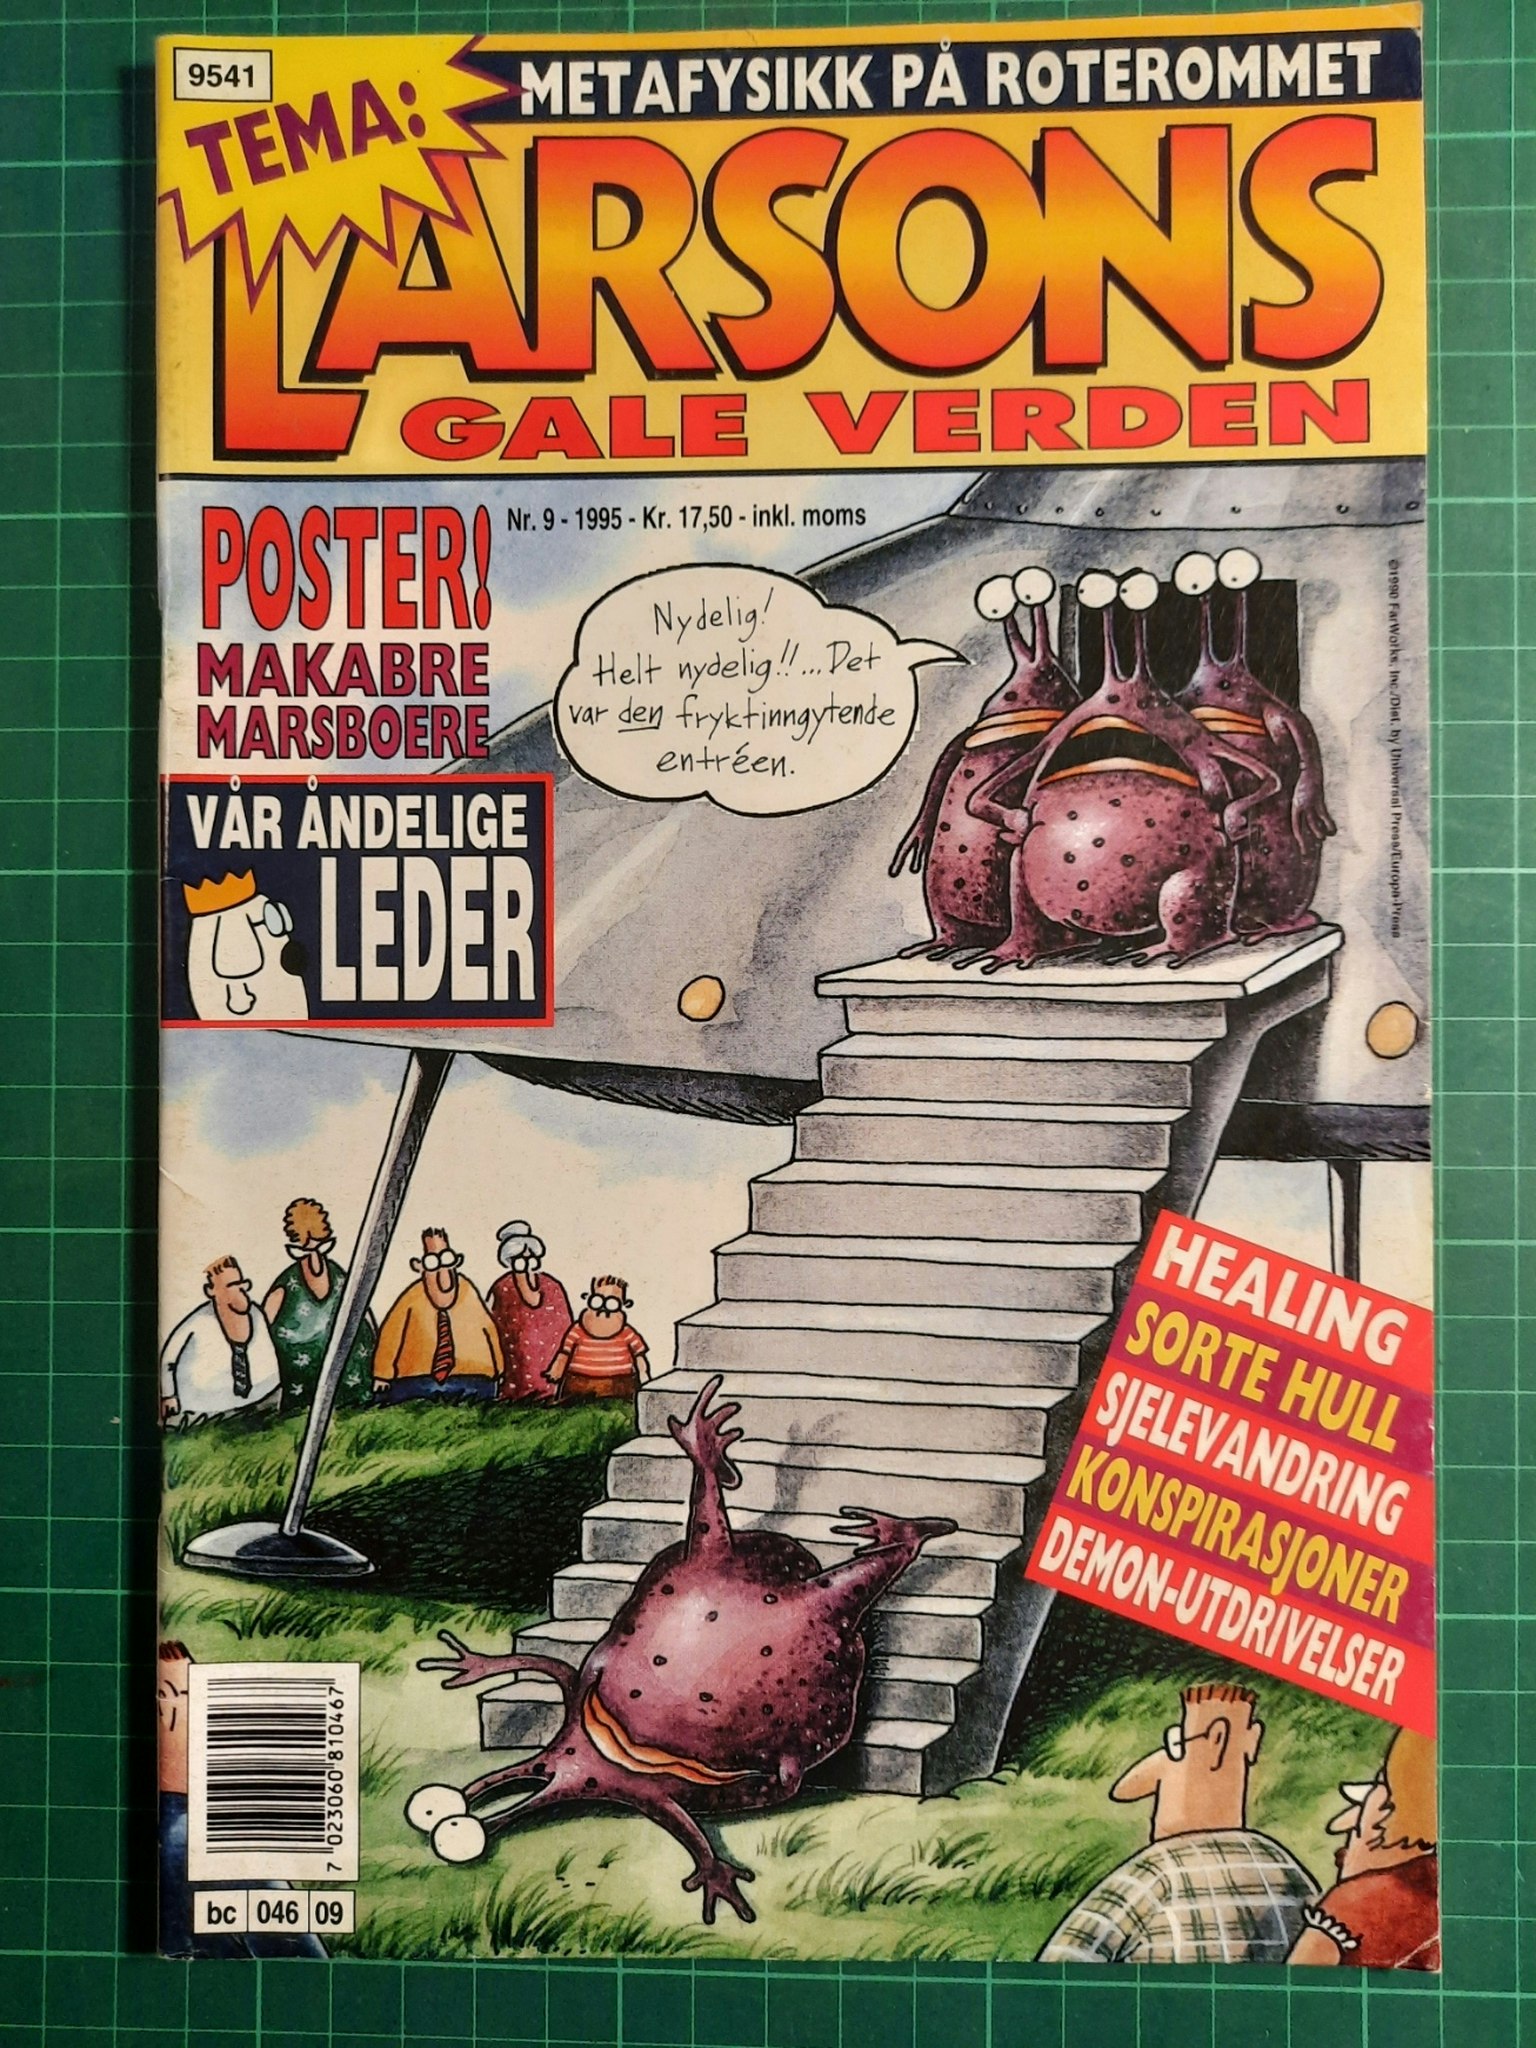 Larsons gale verden 1995 - 09